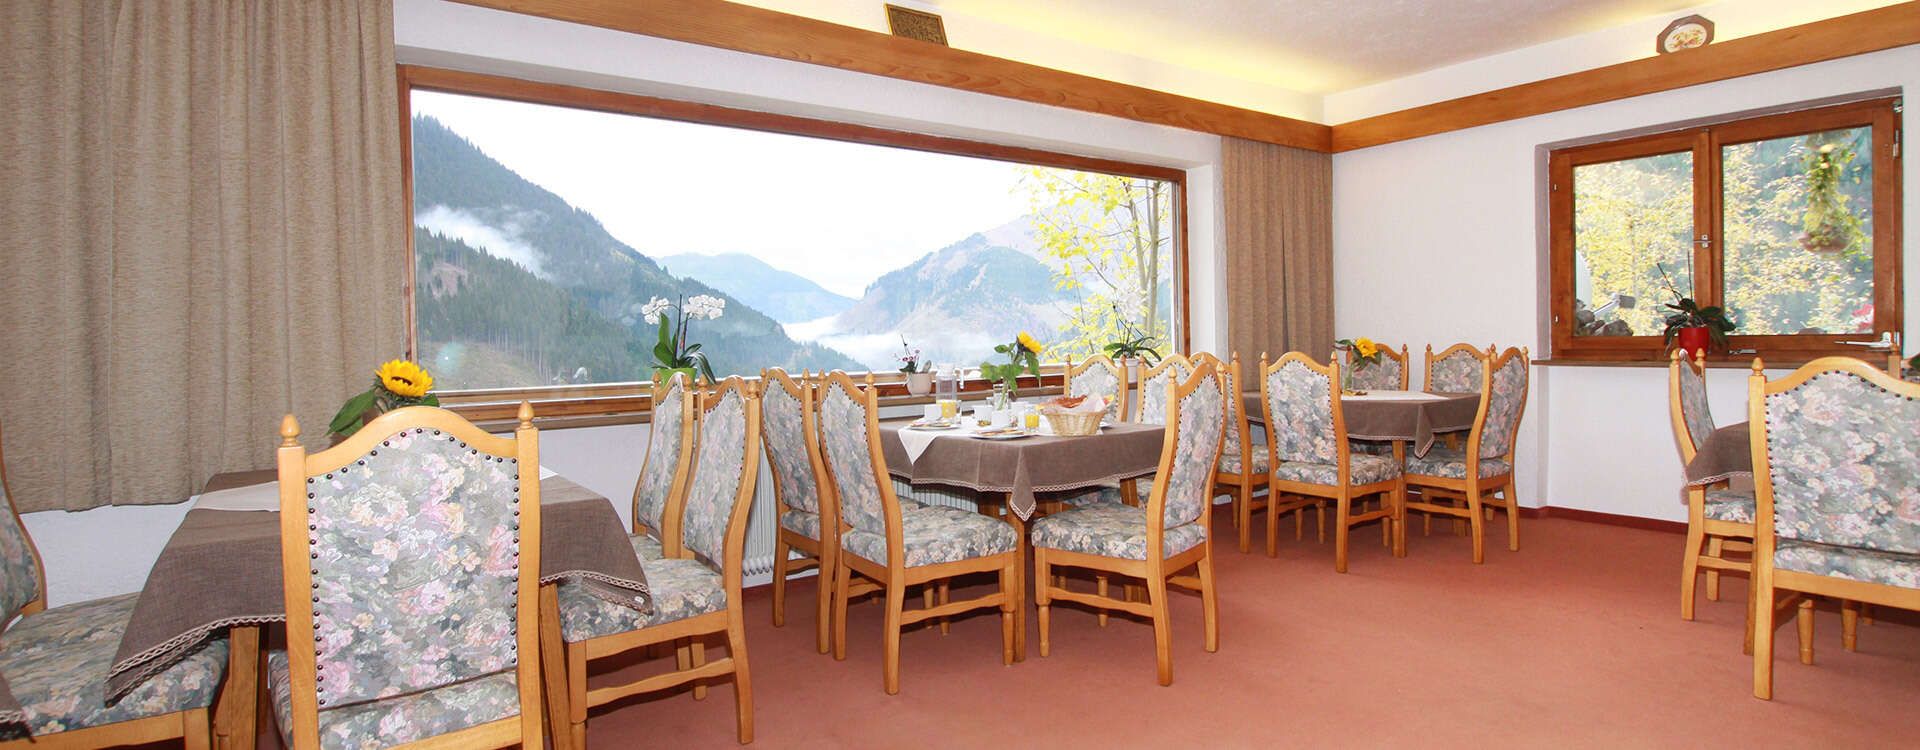 Breakfast room Haus Schöne Aussicht Berwang Tirol